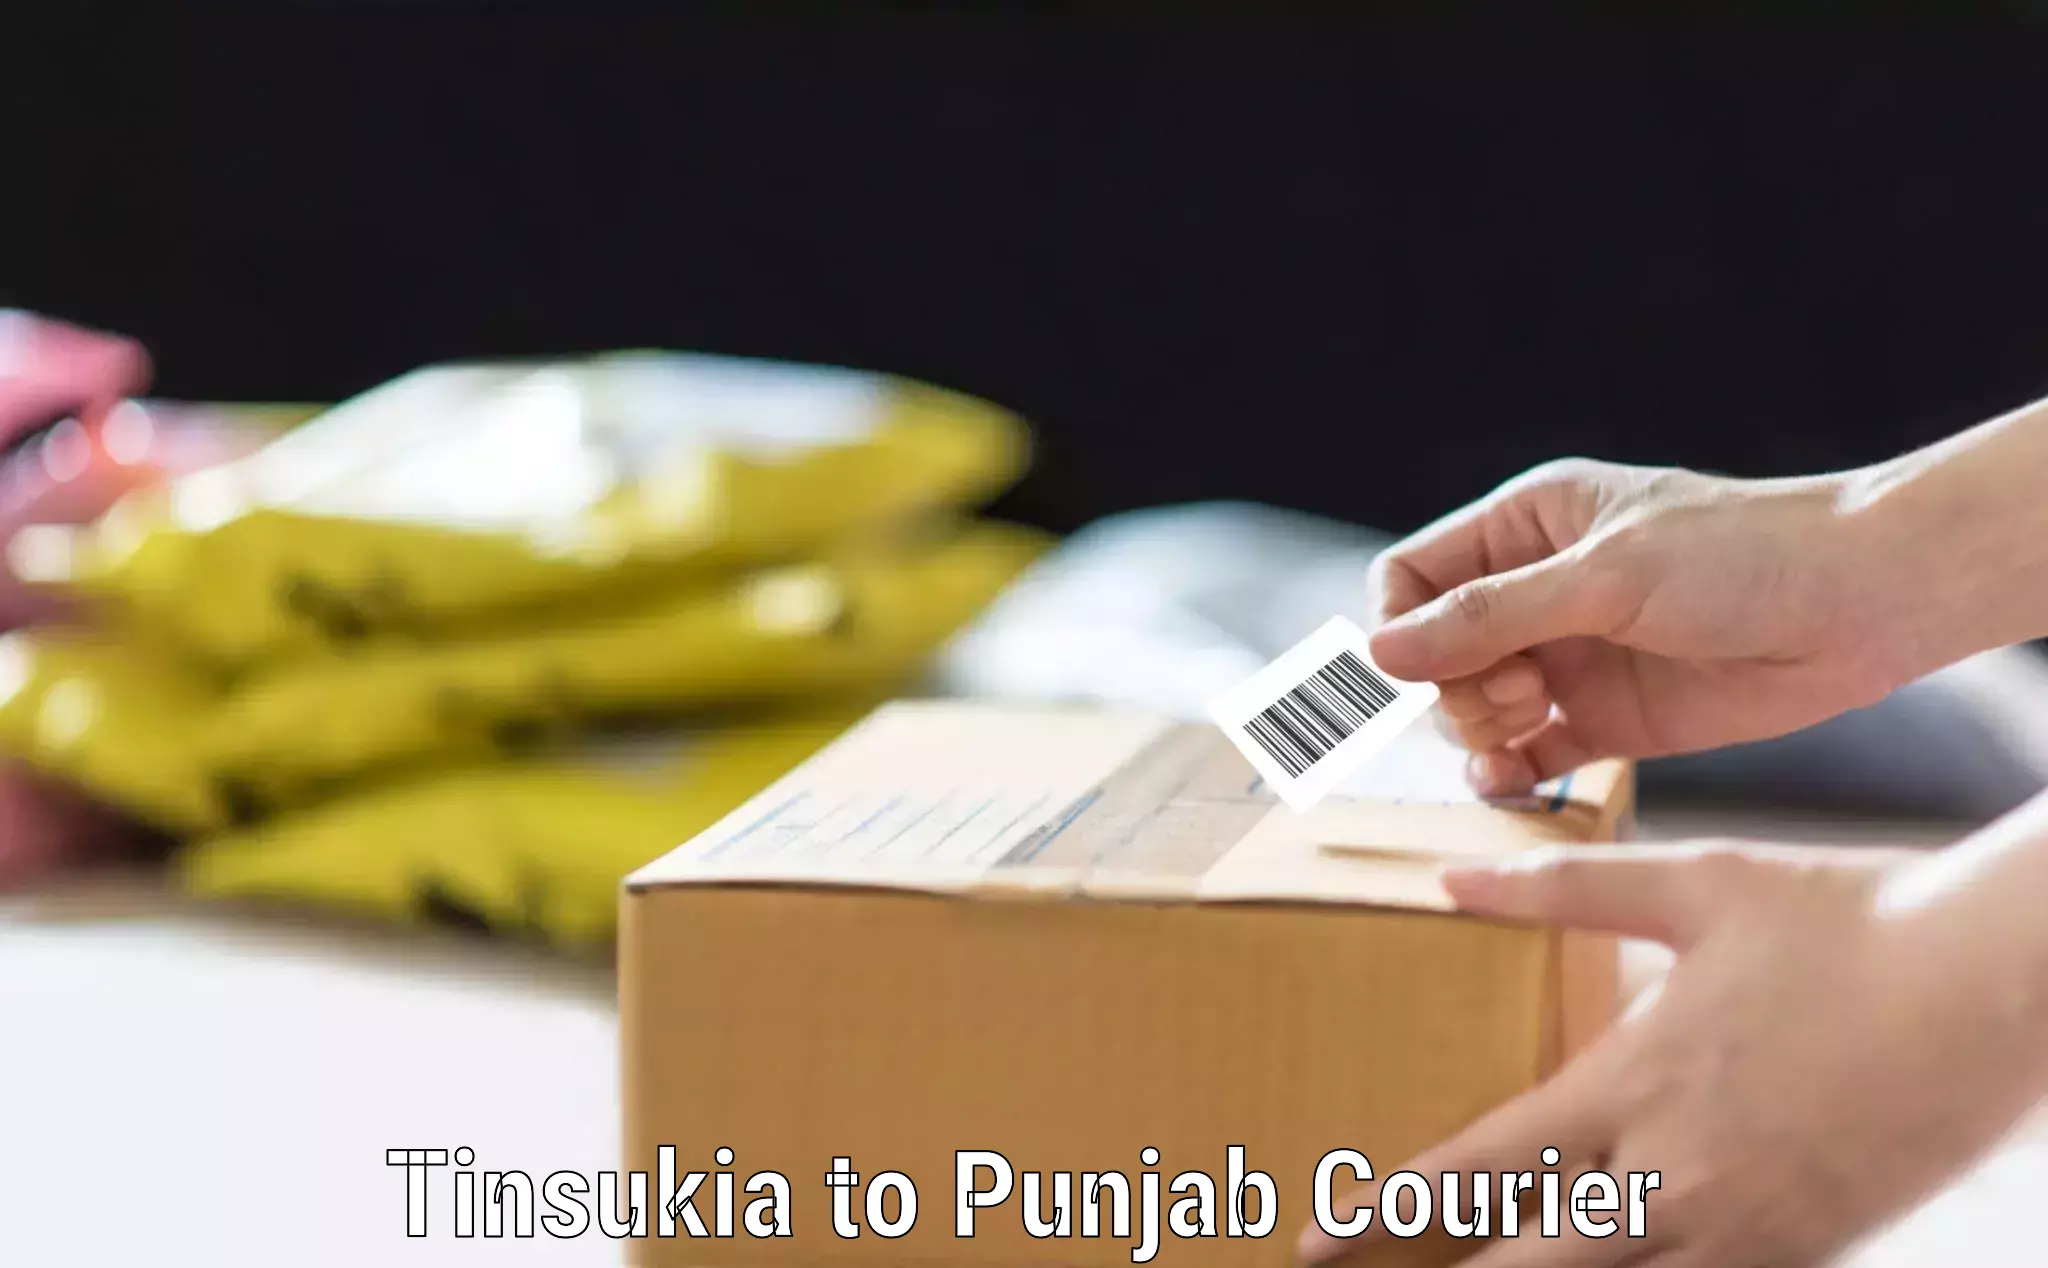 Luggage delivery network Tinsukia to Punjab